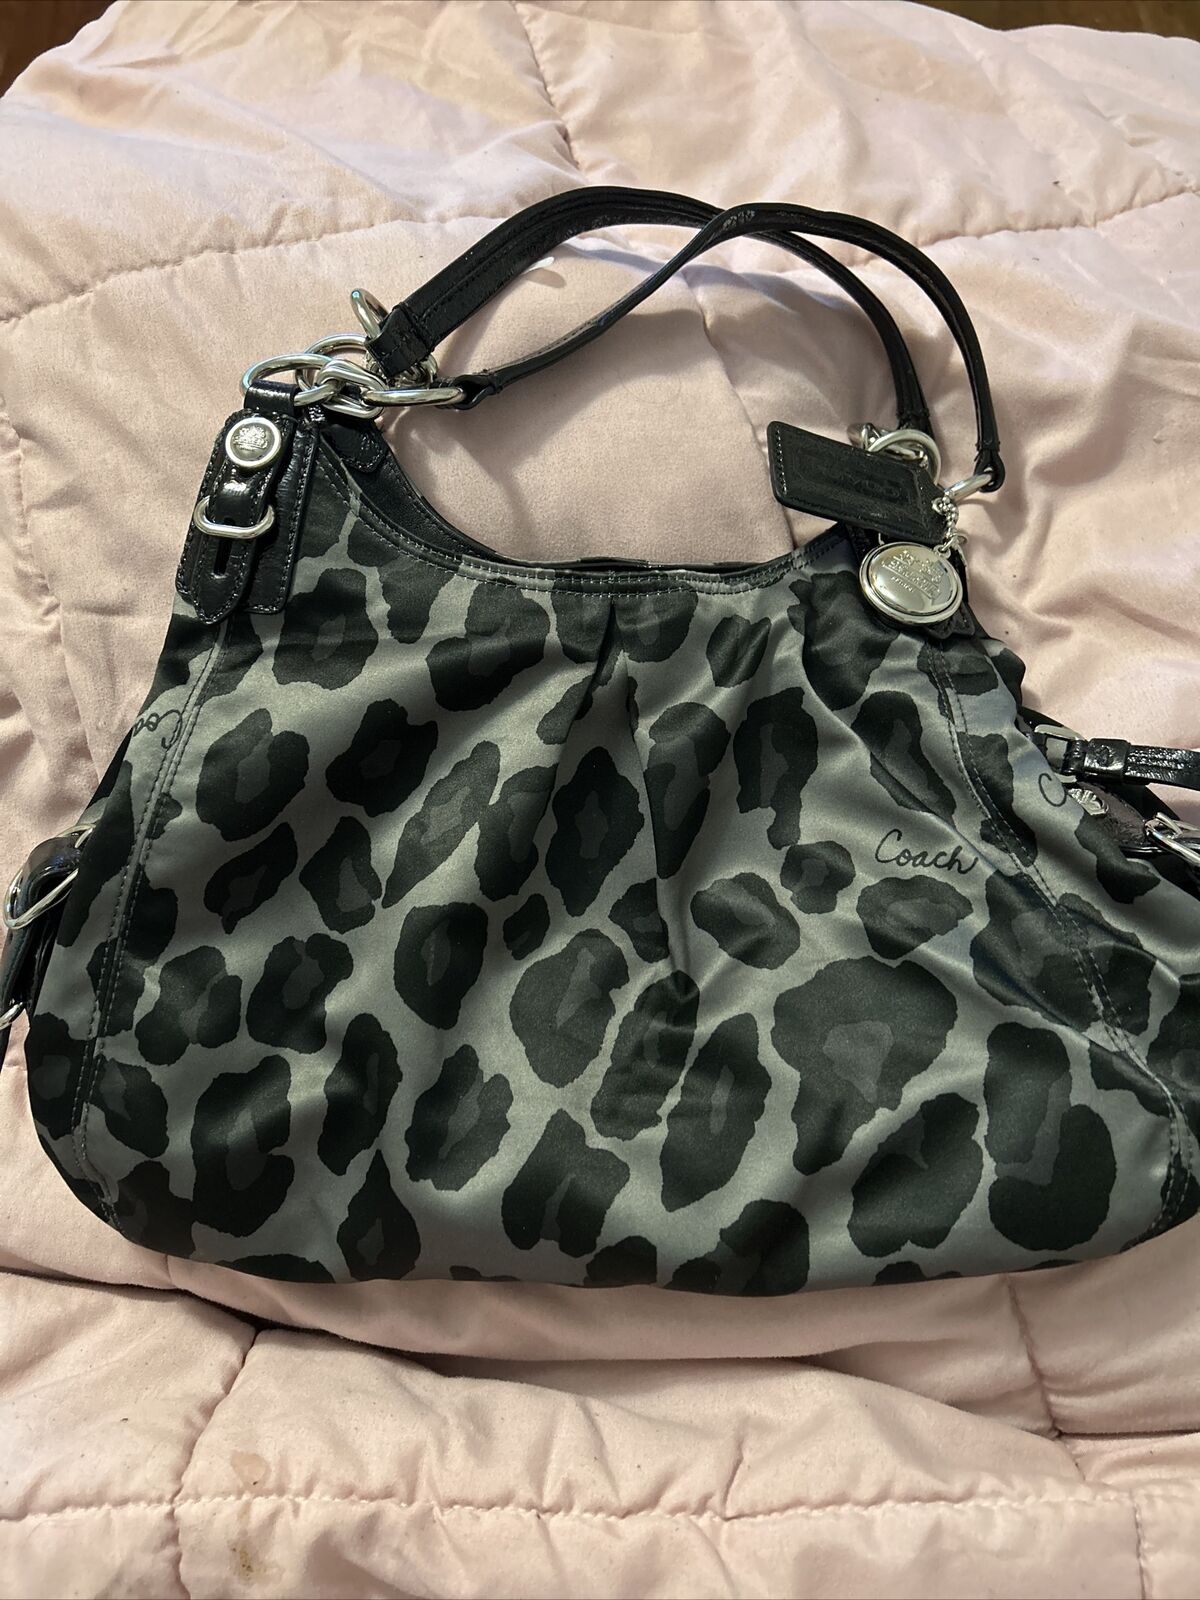 Coach Maggie Ocelot Leopard shoulder bag purse